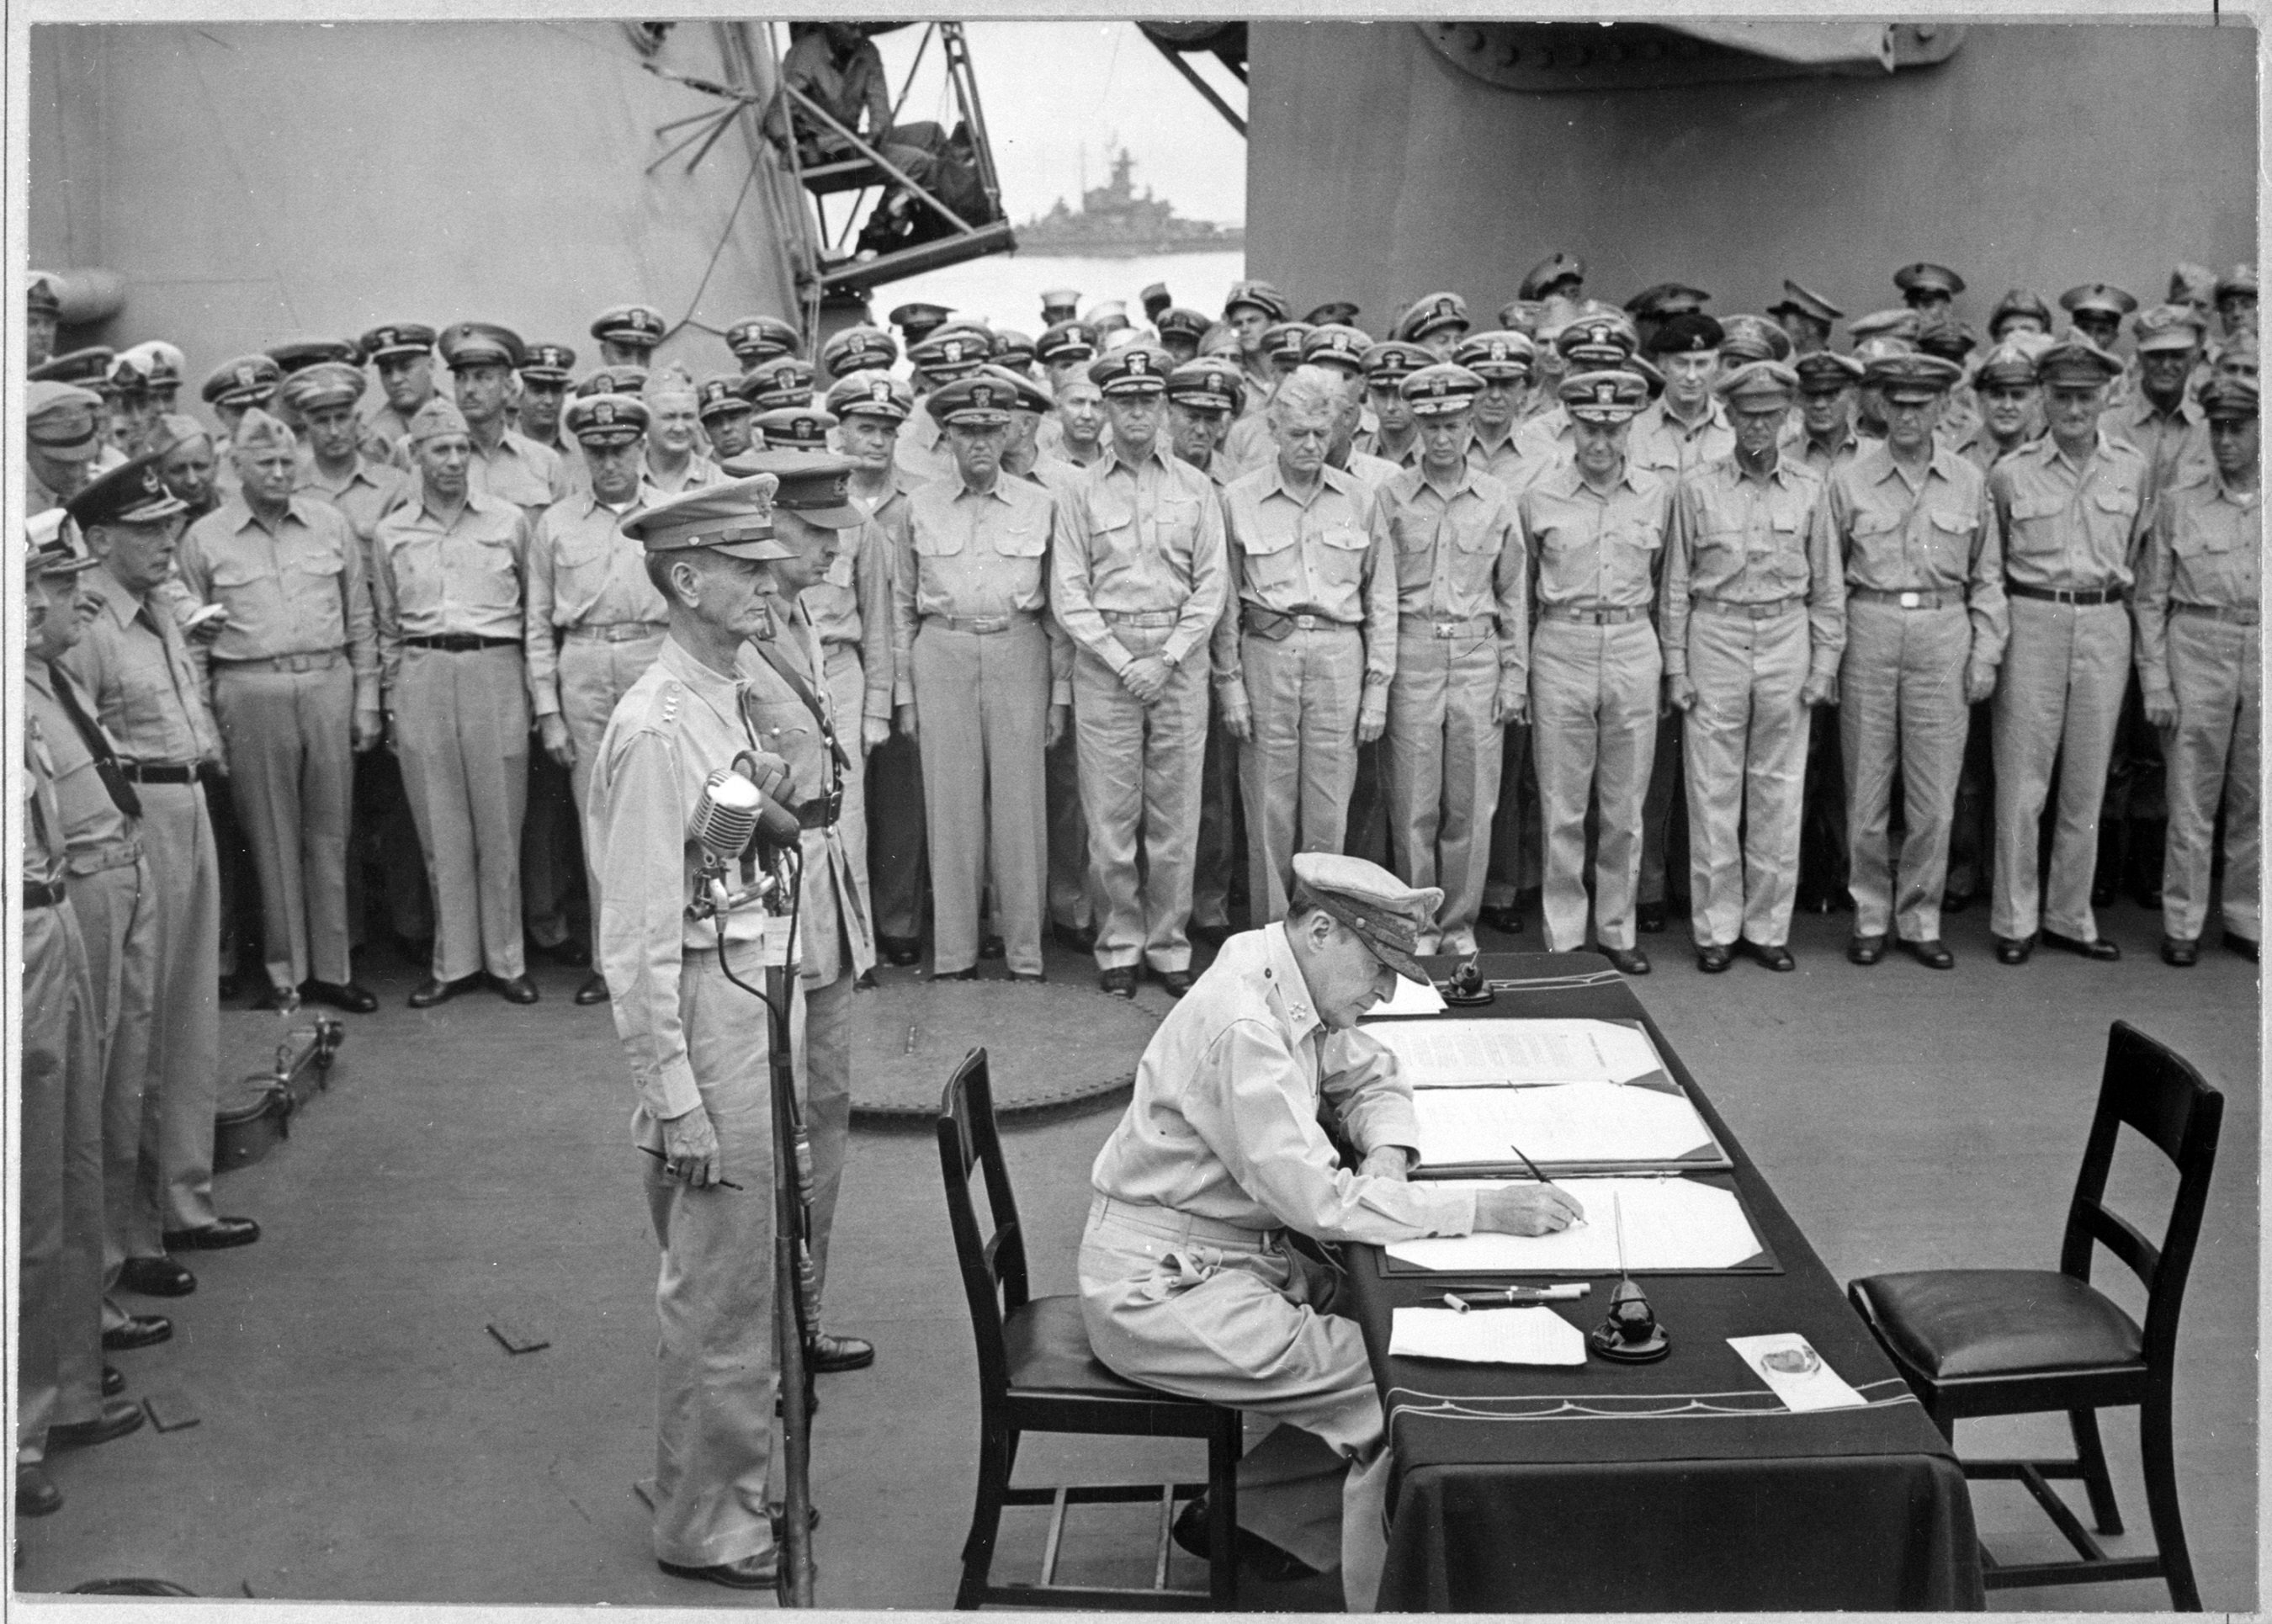 Meza Mashi 1945年9月2日09 08 ダグラス マッカーサー陸軍元帥が 連合国軍最高司令官の名に於いて連合国に依る日本の降伏受諾文書に署名する 続いて09 12 チェスター ニミッツ海軍元帥が アメリカ合衆国政府の名に於いて日本の降伏受諾文書に署名する